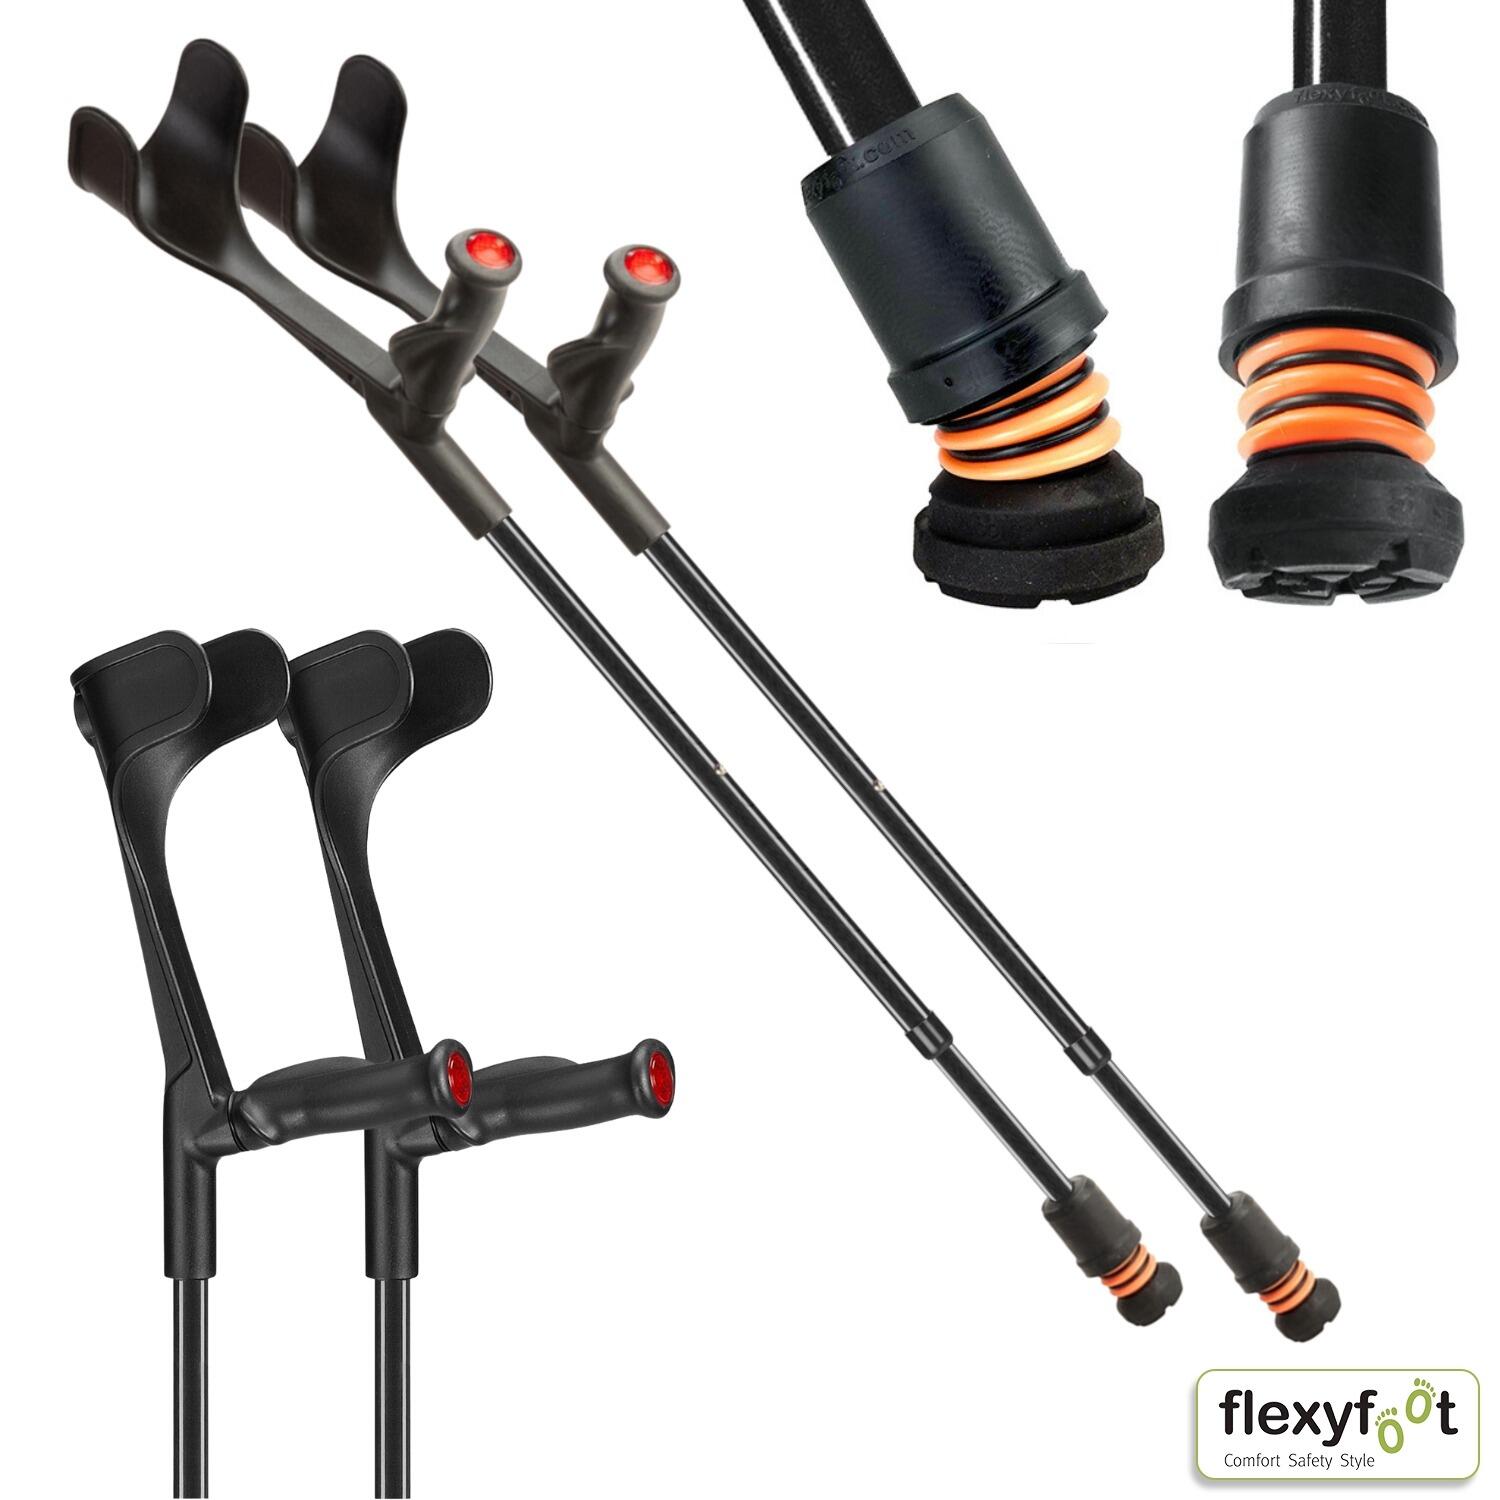 A pair of black Flexyfoot Soft Grip Open Cuff Crutches